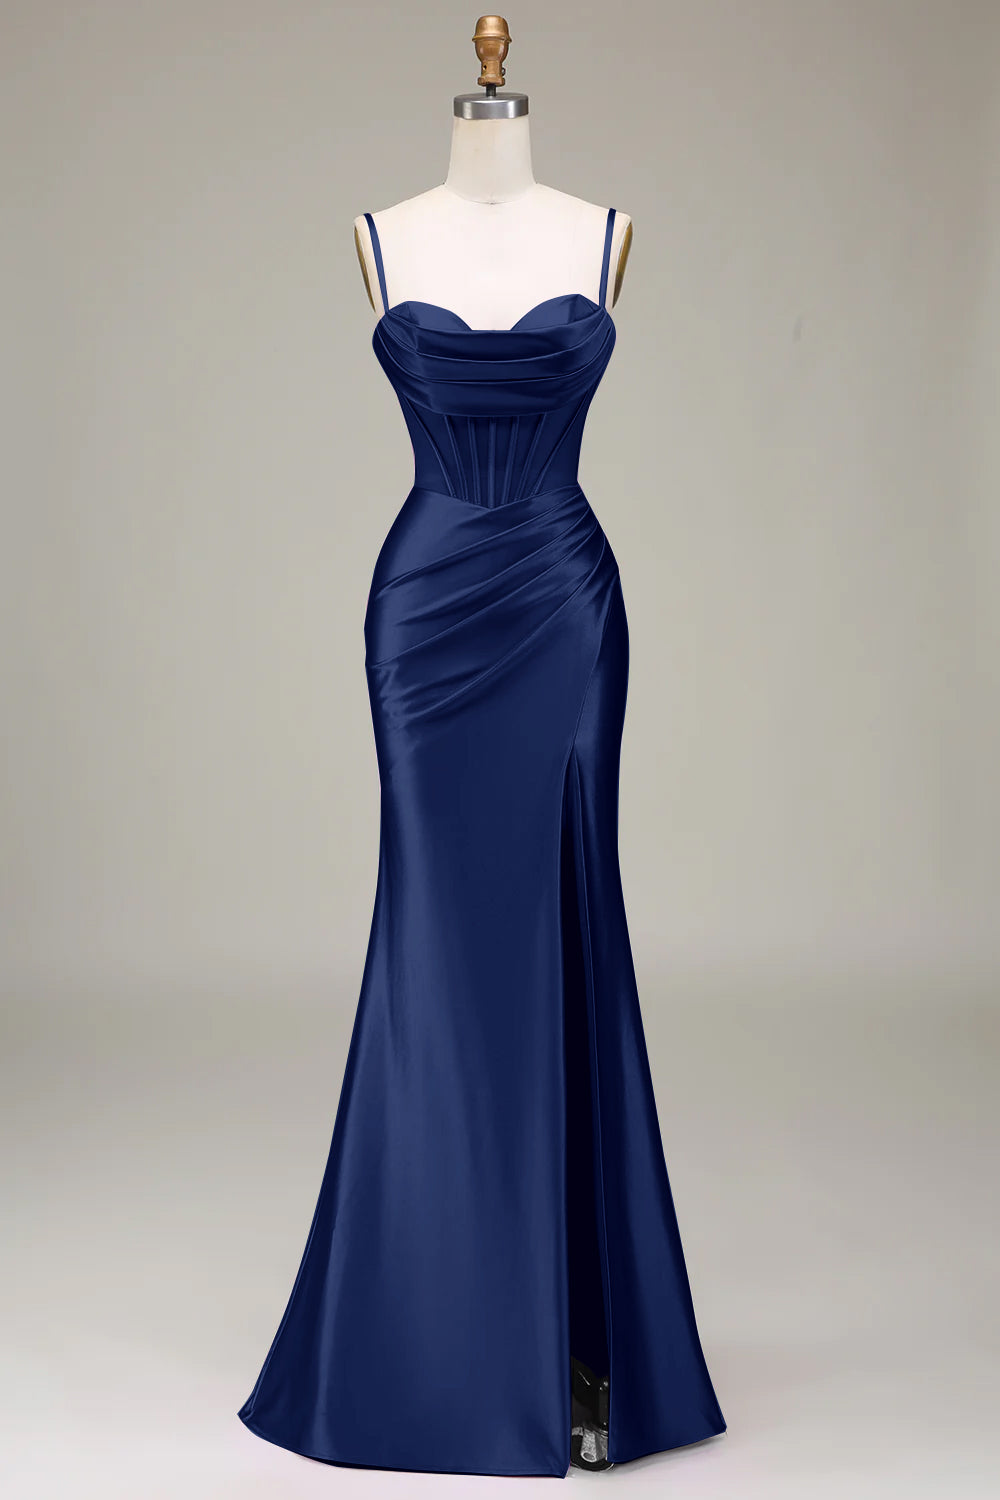 Satin Spaghetti Straps Royal Blue Prom Dress with Corset